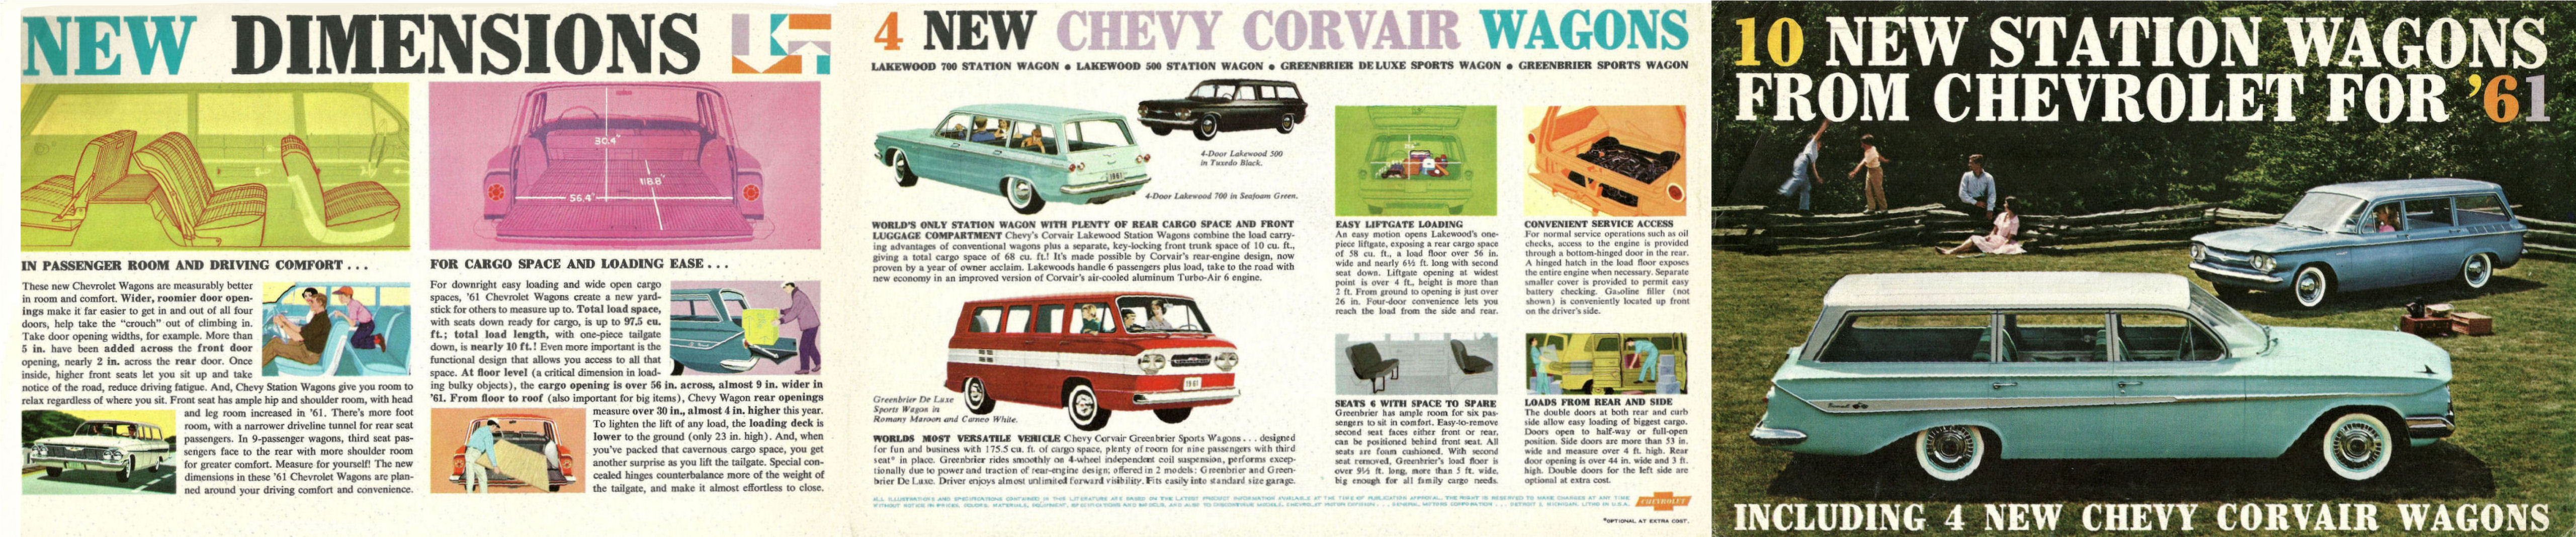 1961_Chevrolet_Wagons_Foldout-01-02-03